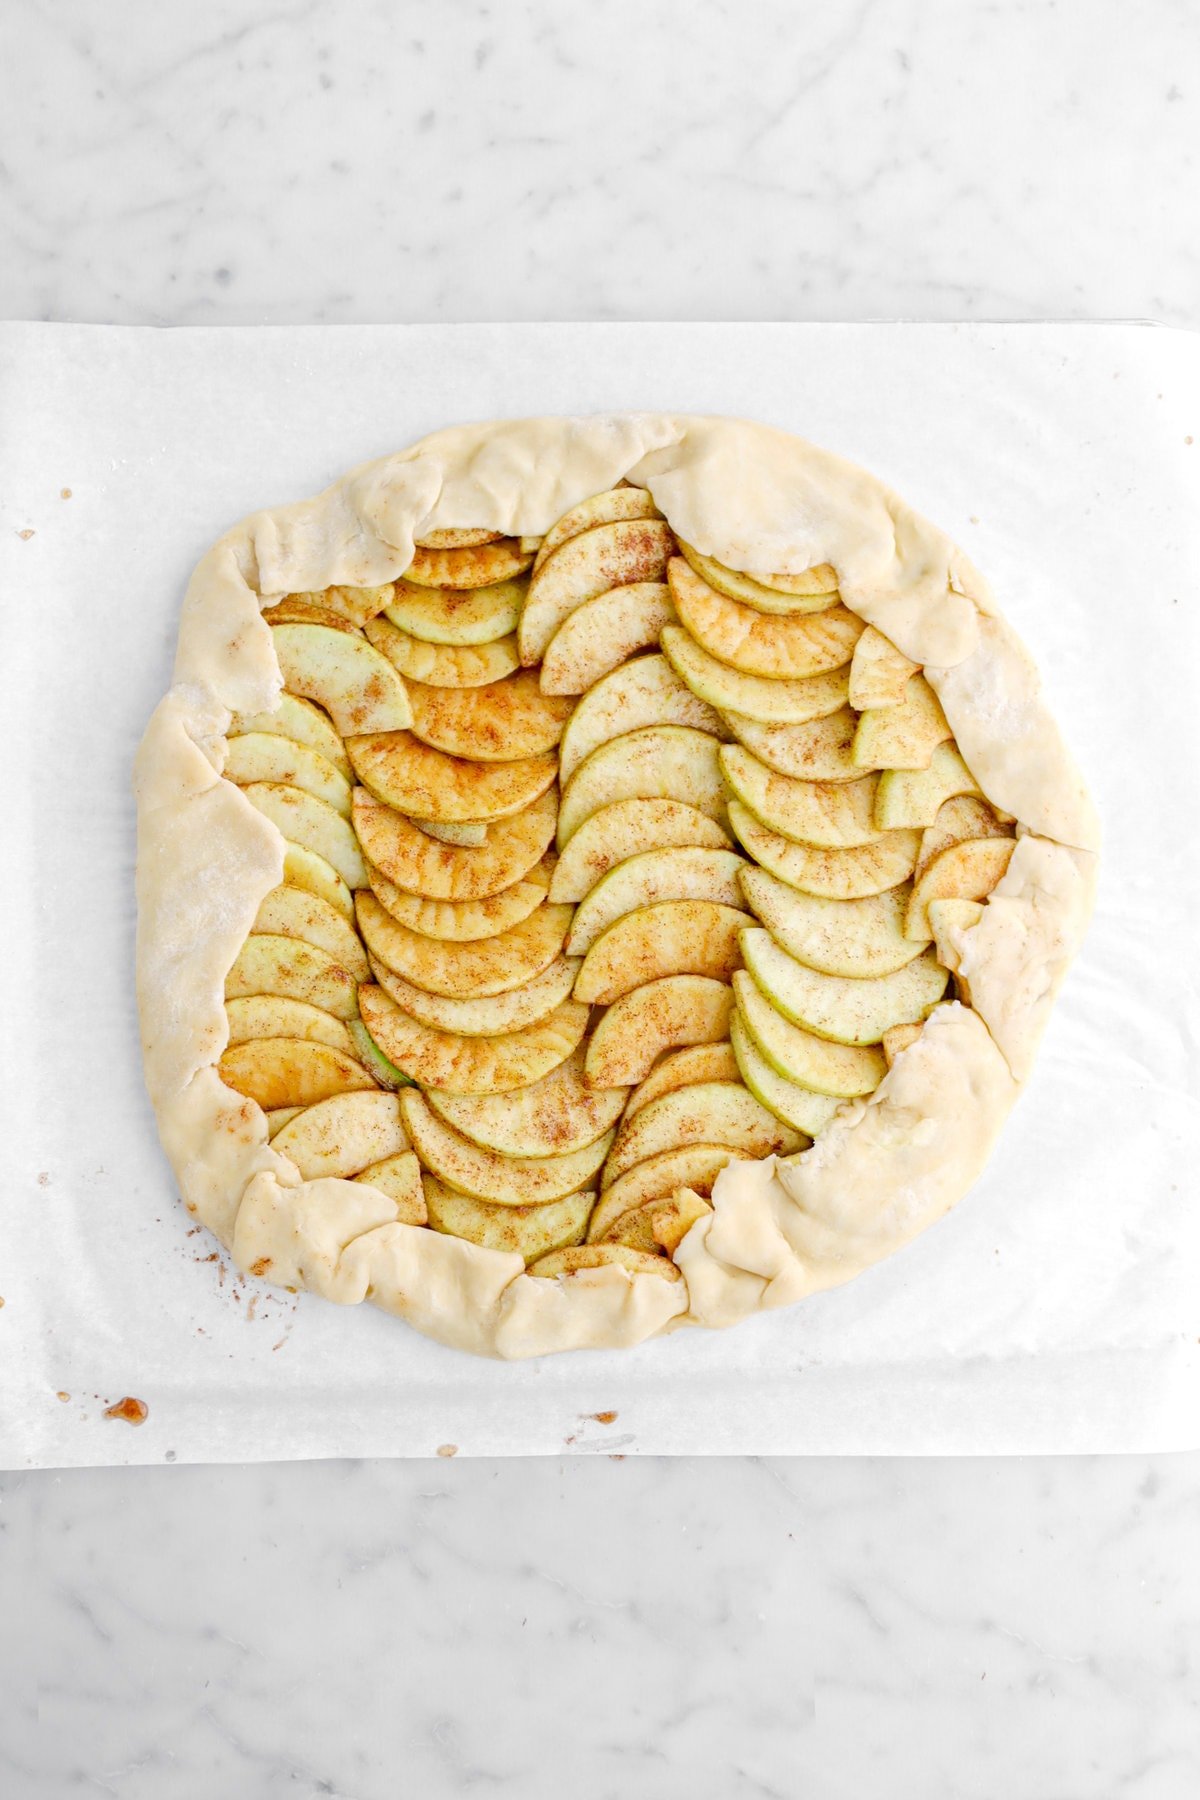 edges of pie dough folded over apple slices.